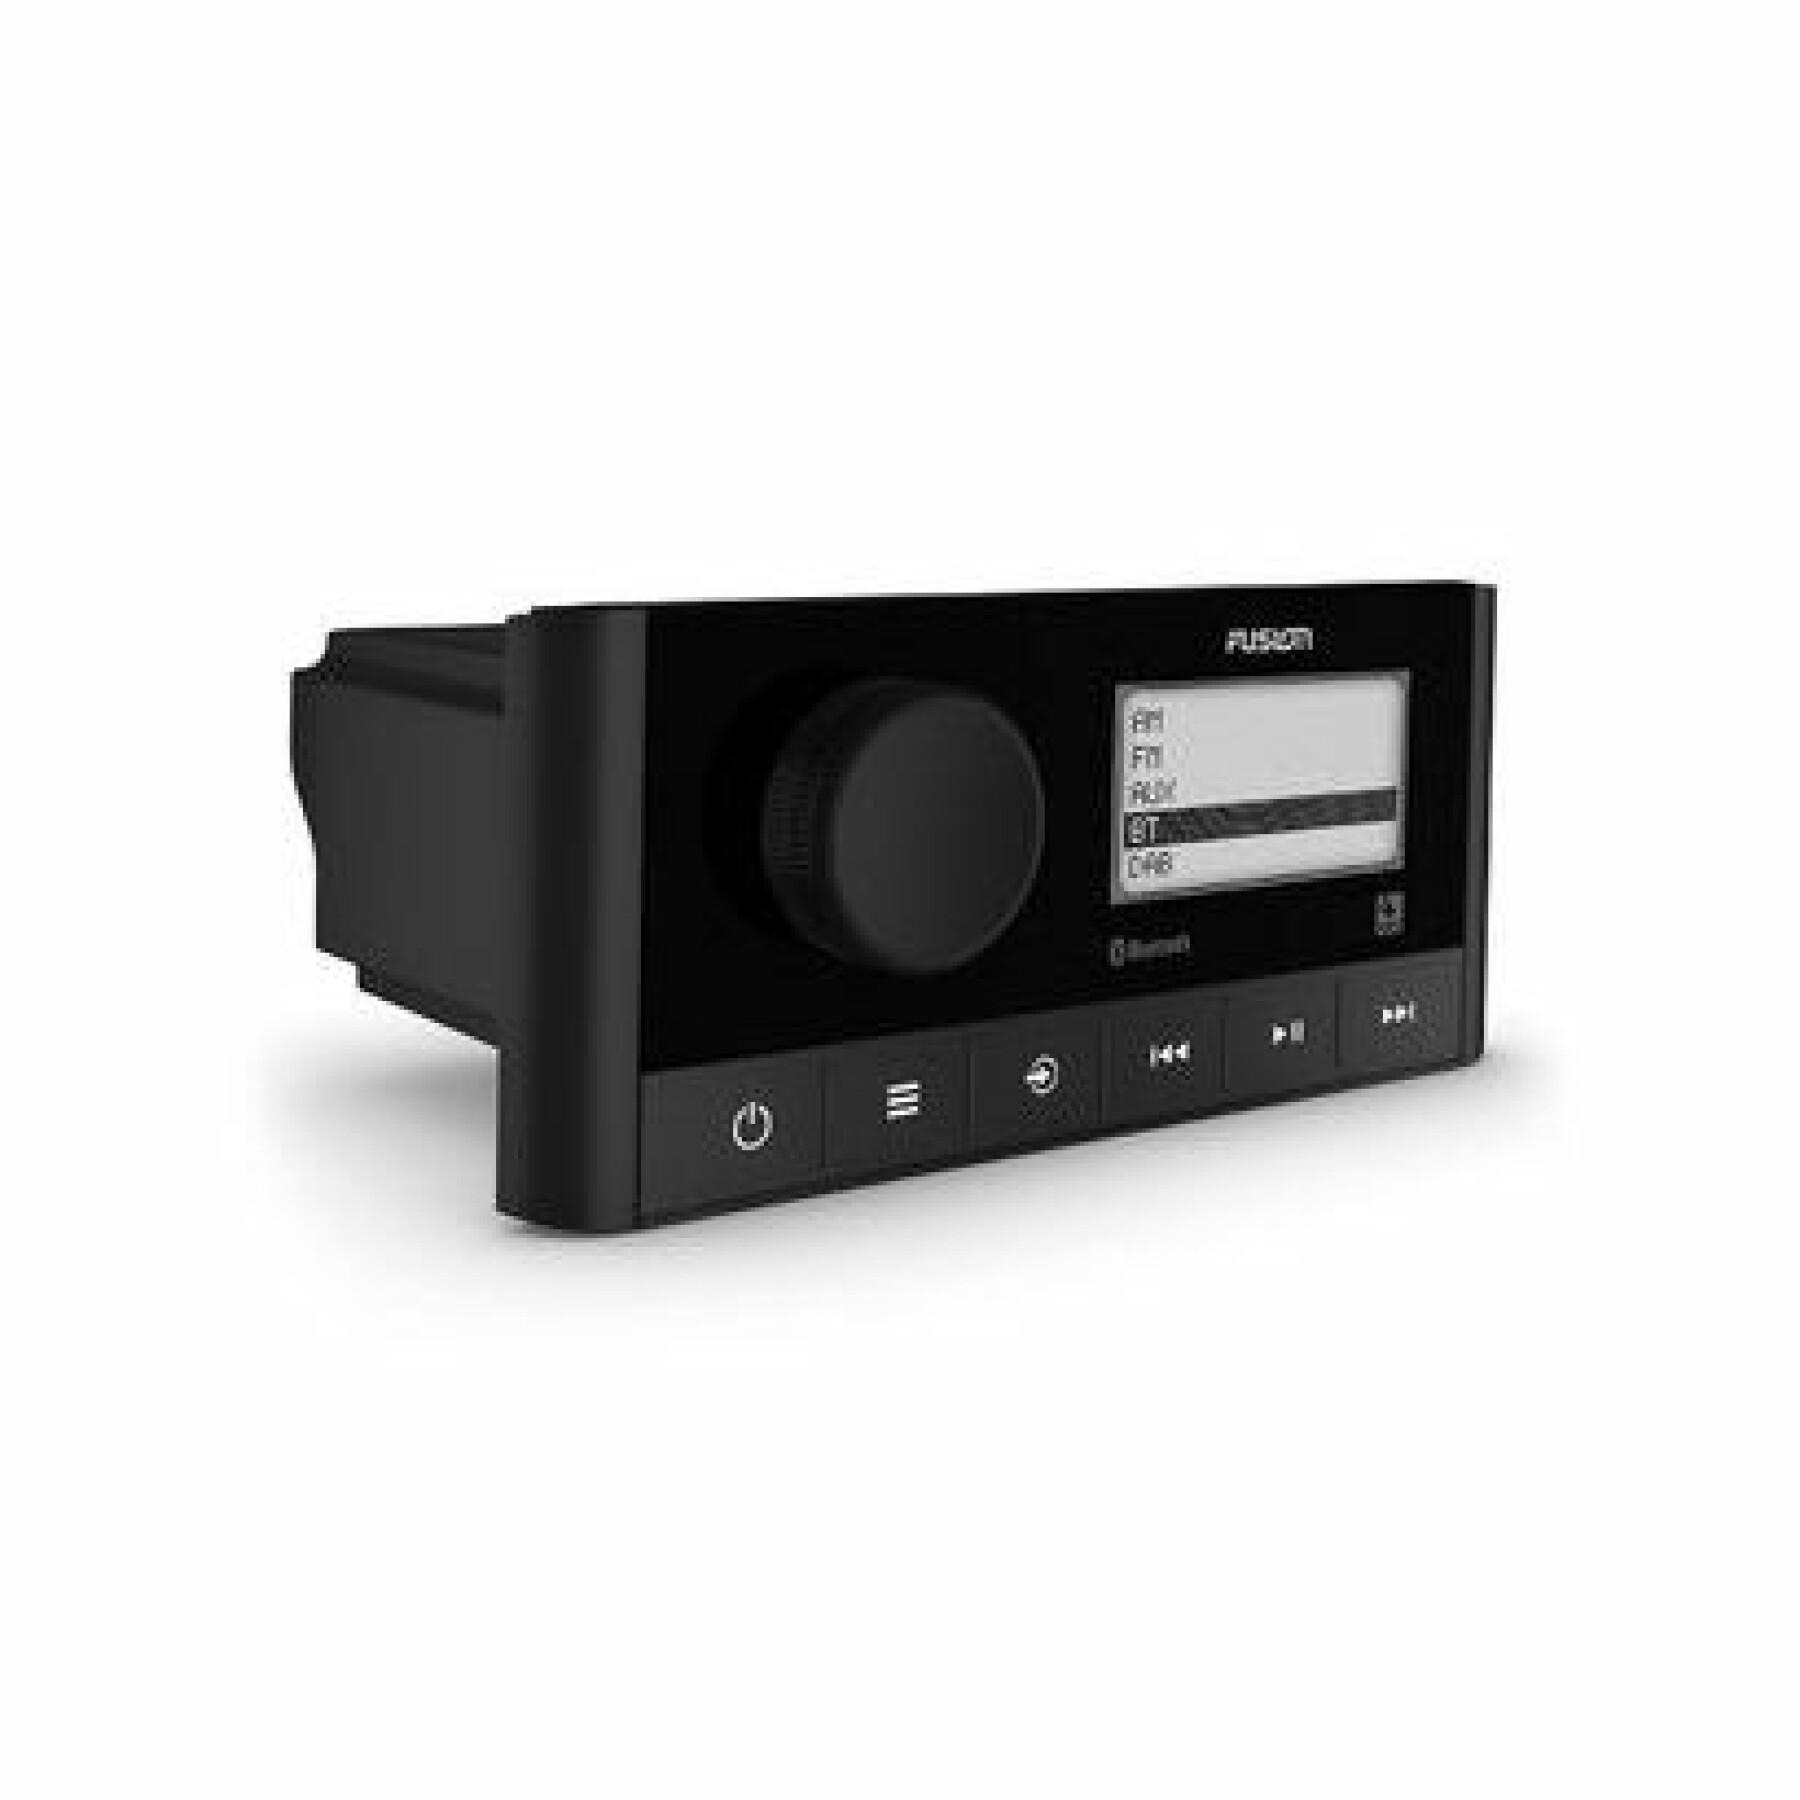 Marine stereo and radio with bluetooth Fusion RA60 - IPX7